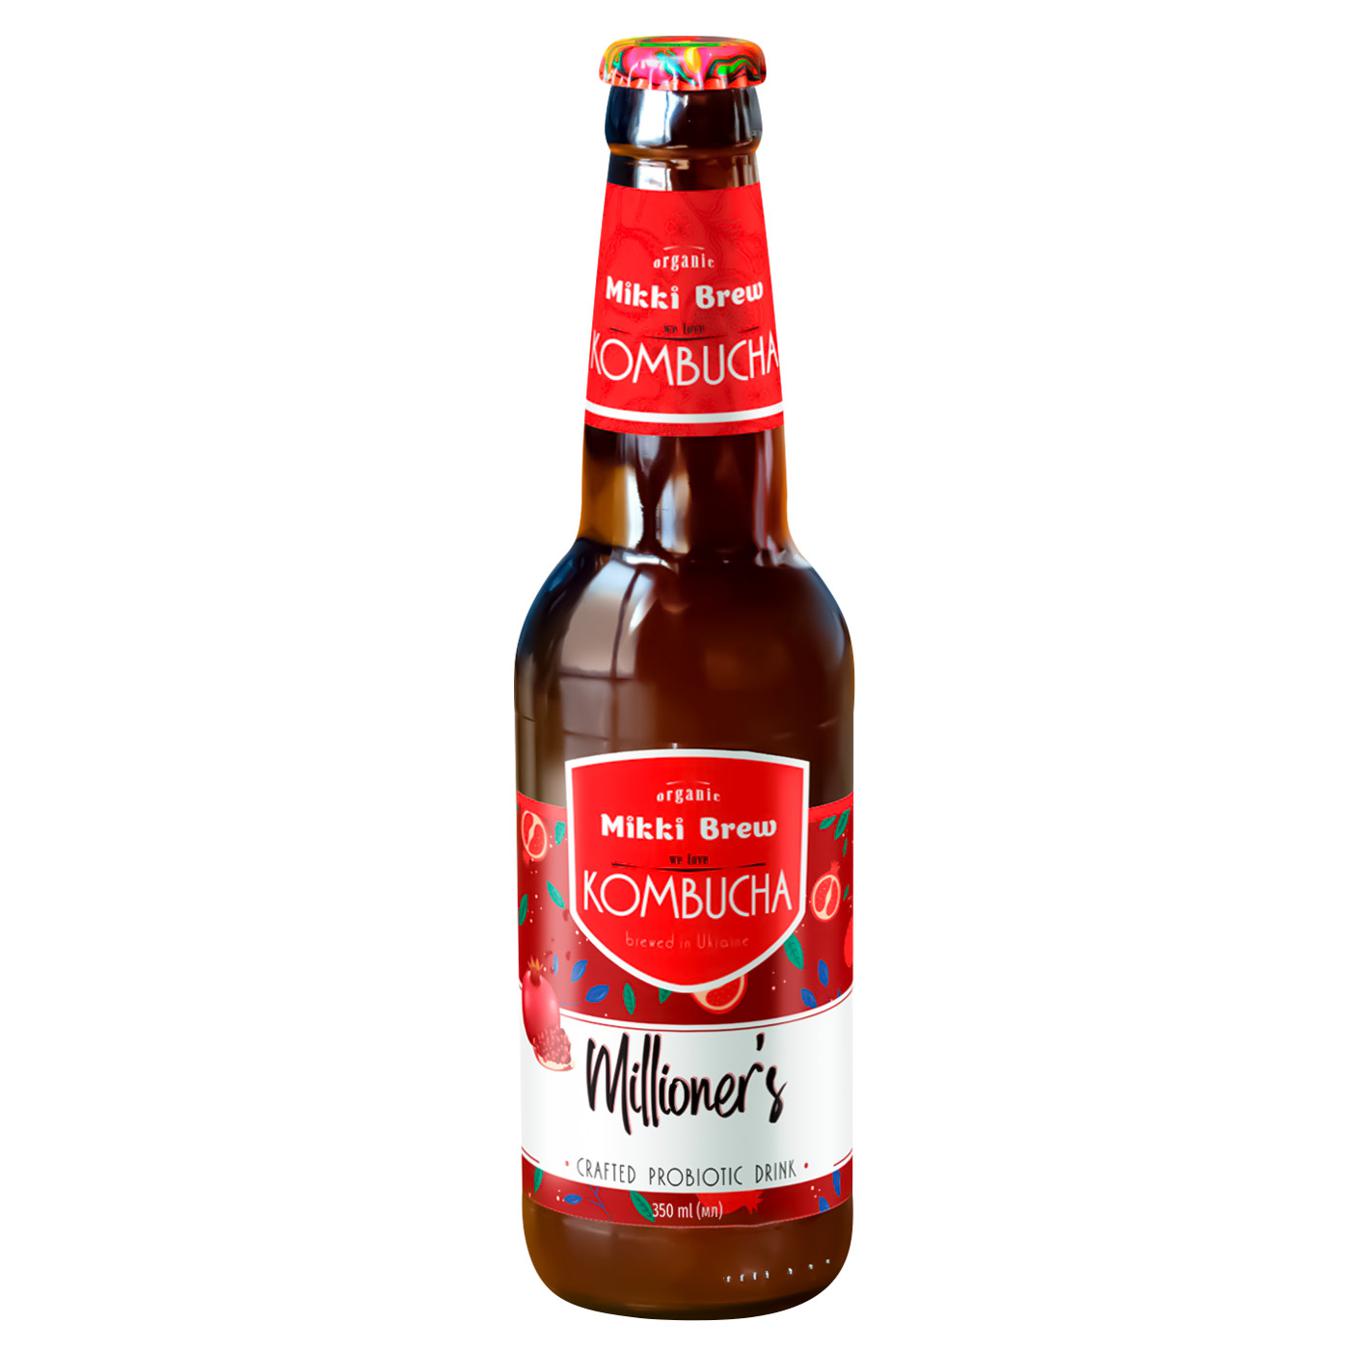 Mikki Brew Millioner's kombucha drink, non-alcoholic slightly carbonated 350 ml glass